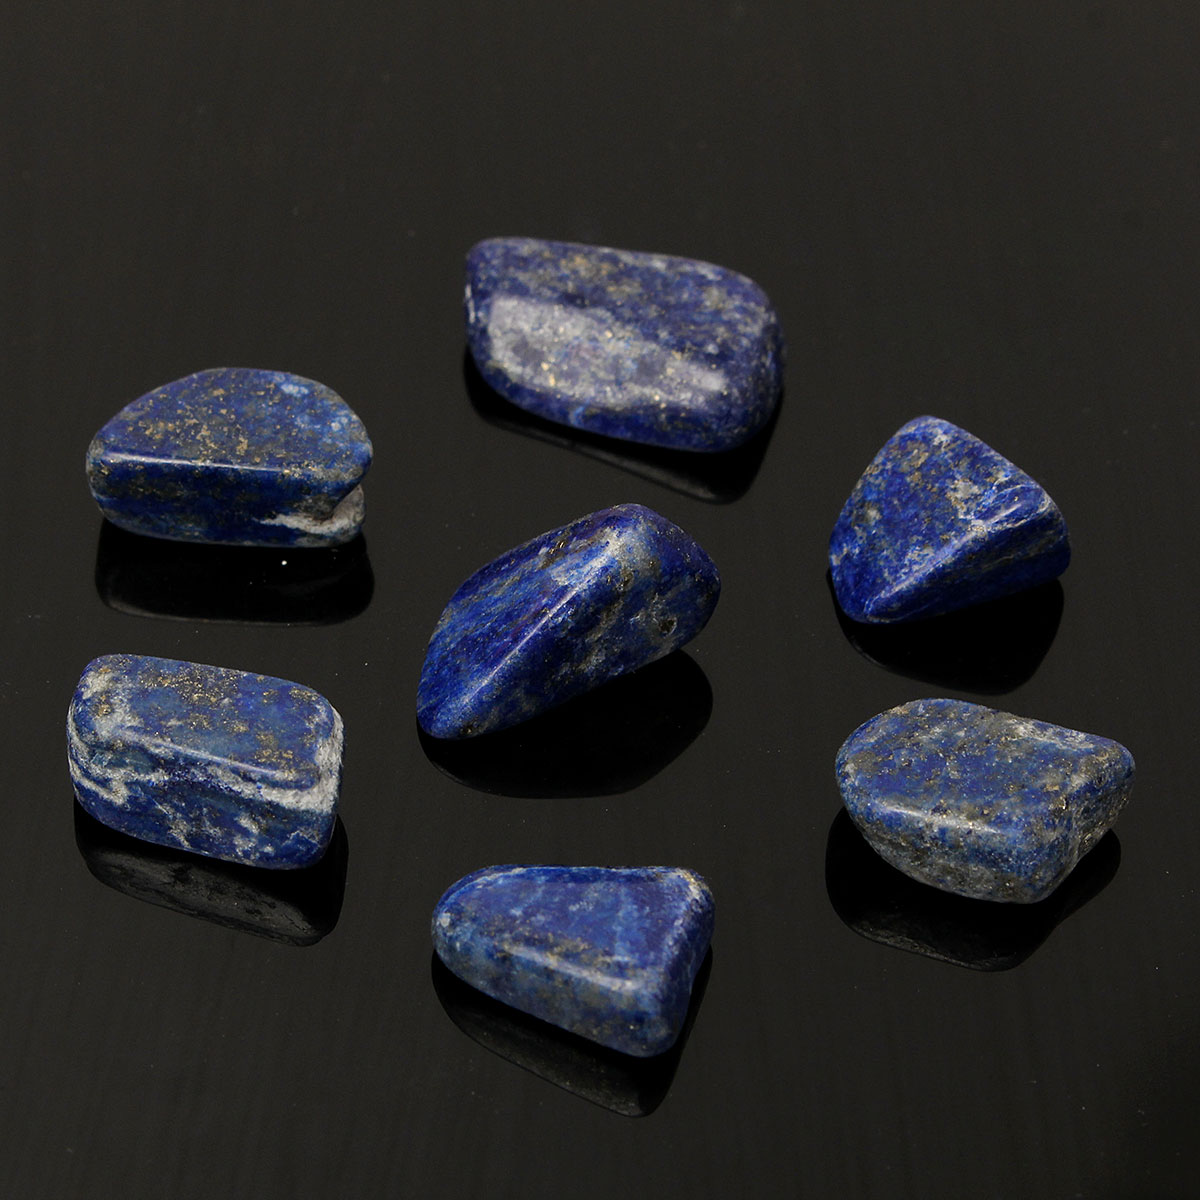 50g Blue Lapis Lazuli Rough Stone Rock Specimen Home Decoration Craft